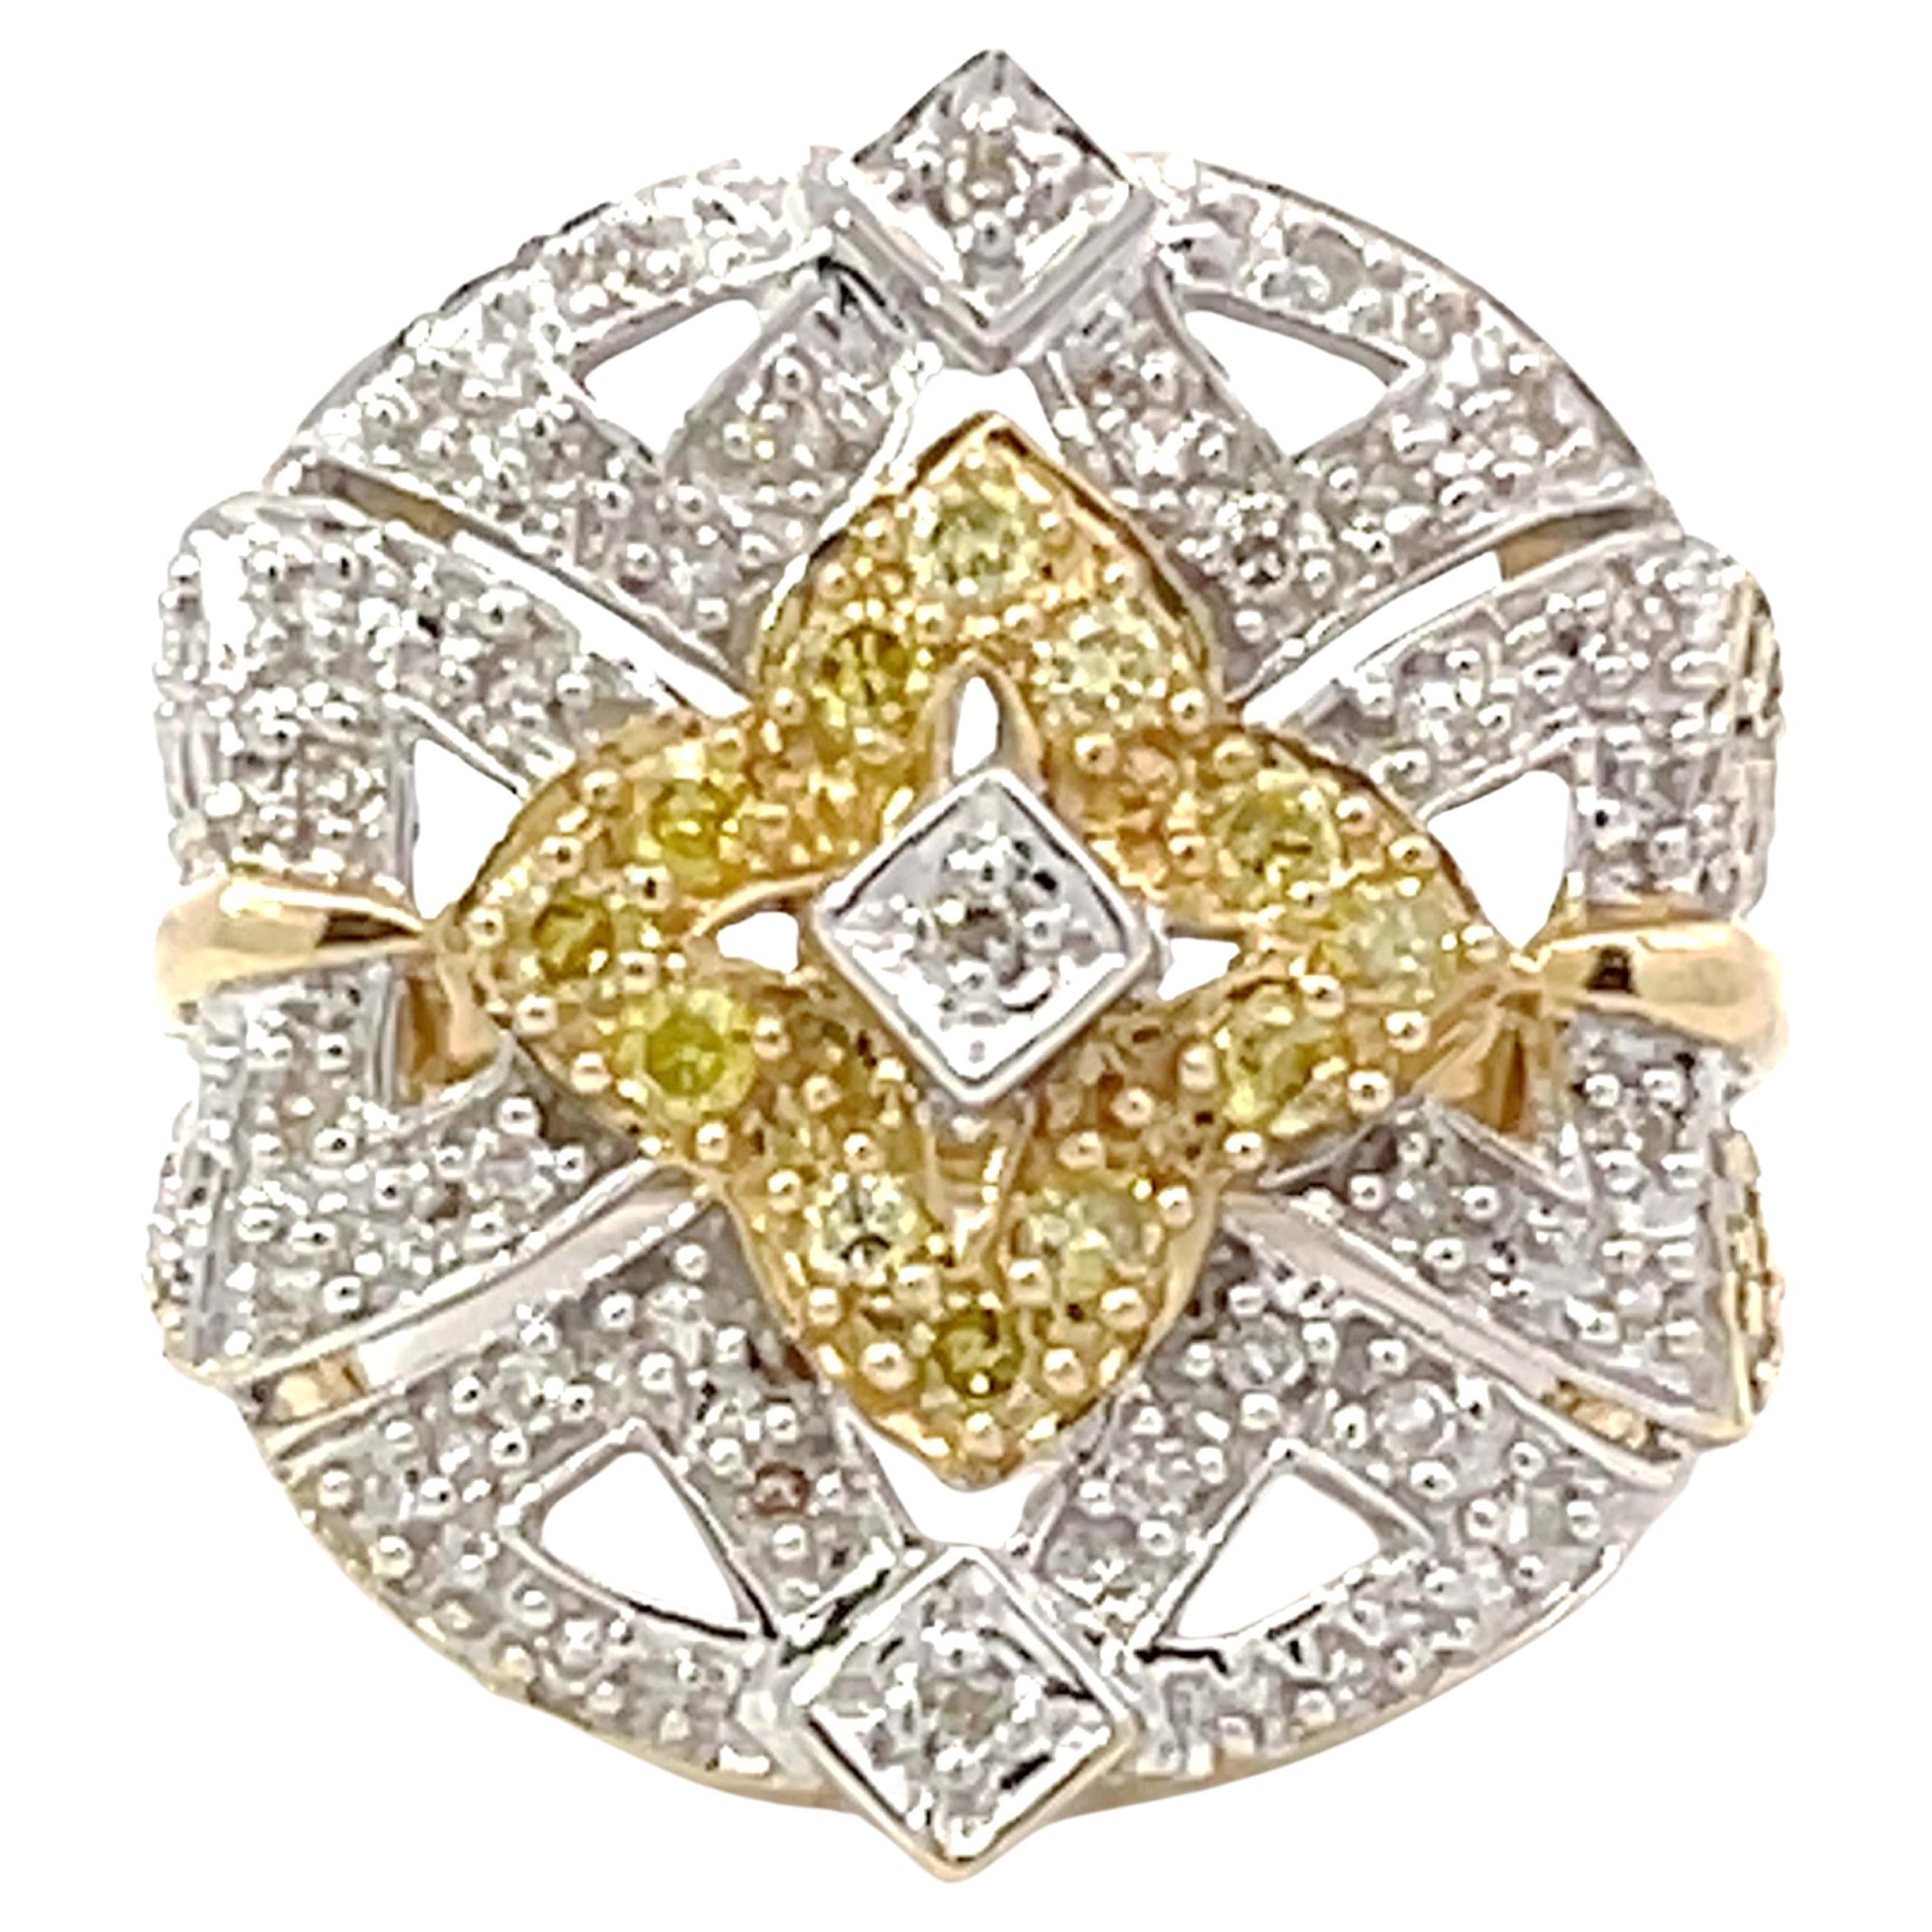 White and Yellow Diamond Geometric Design Ring in 14k Yellow Gold